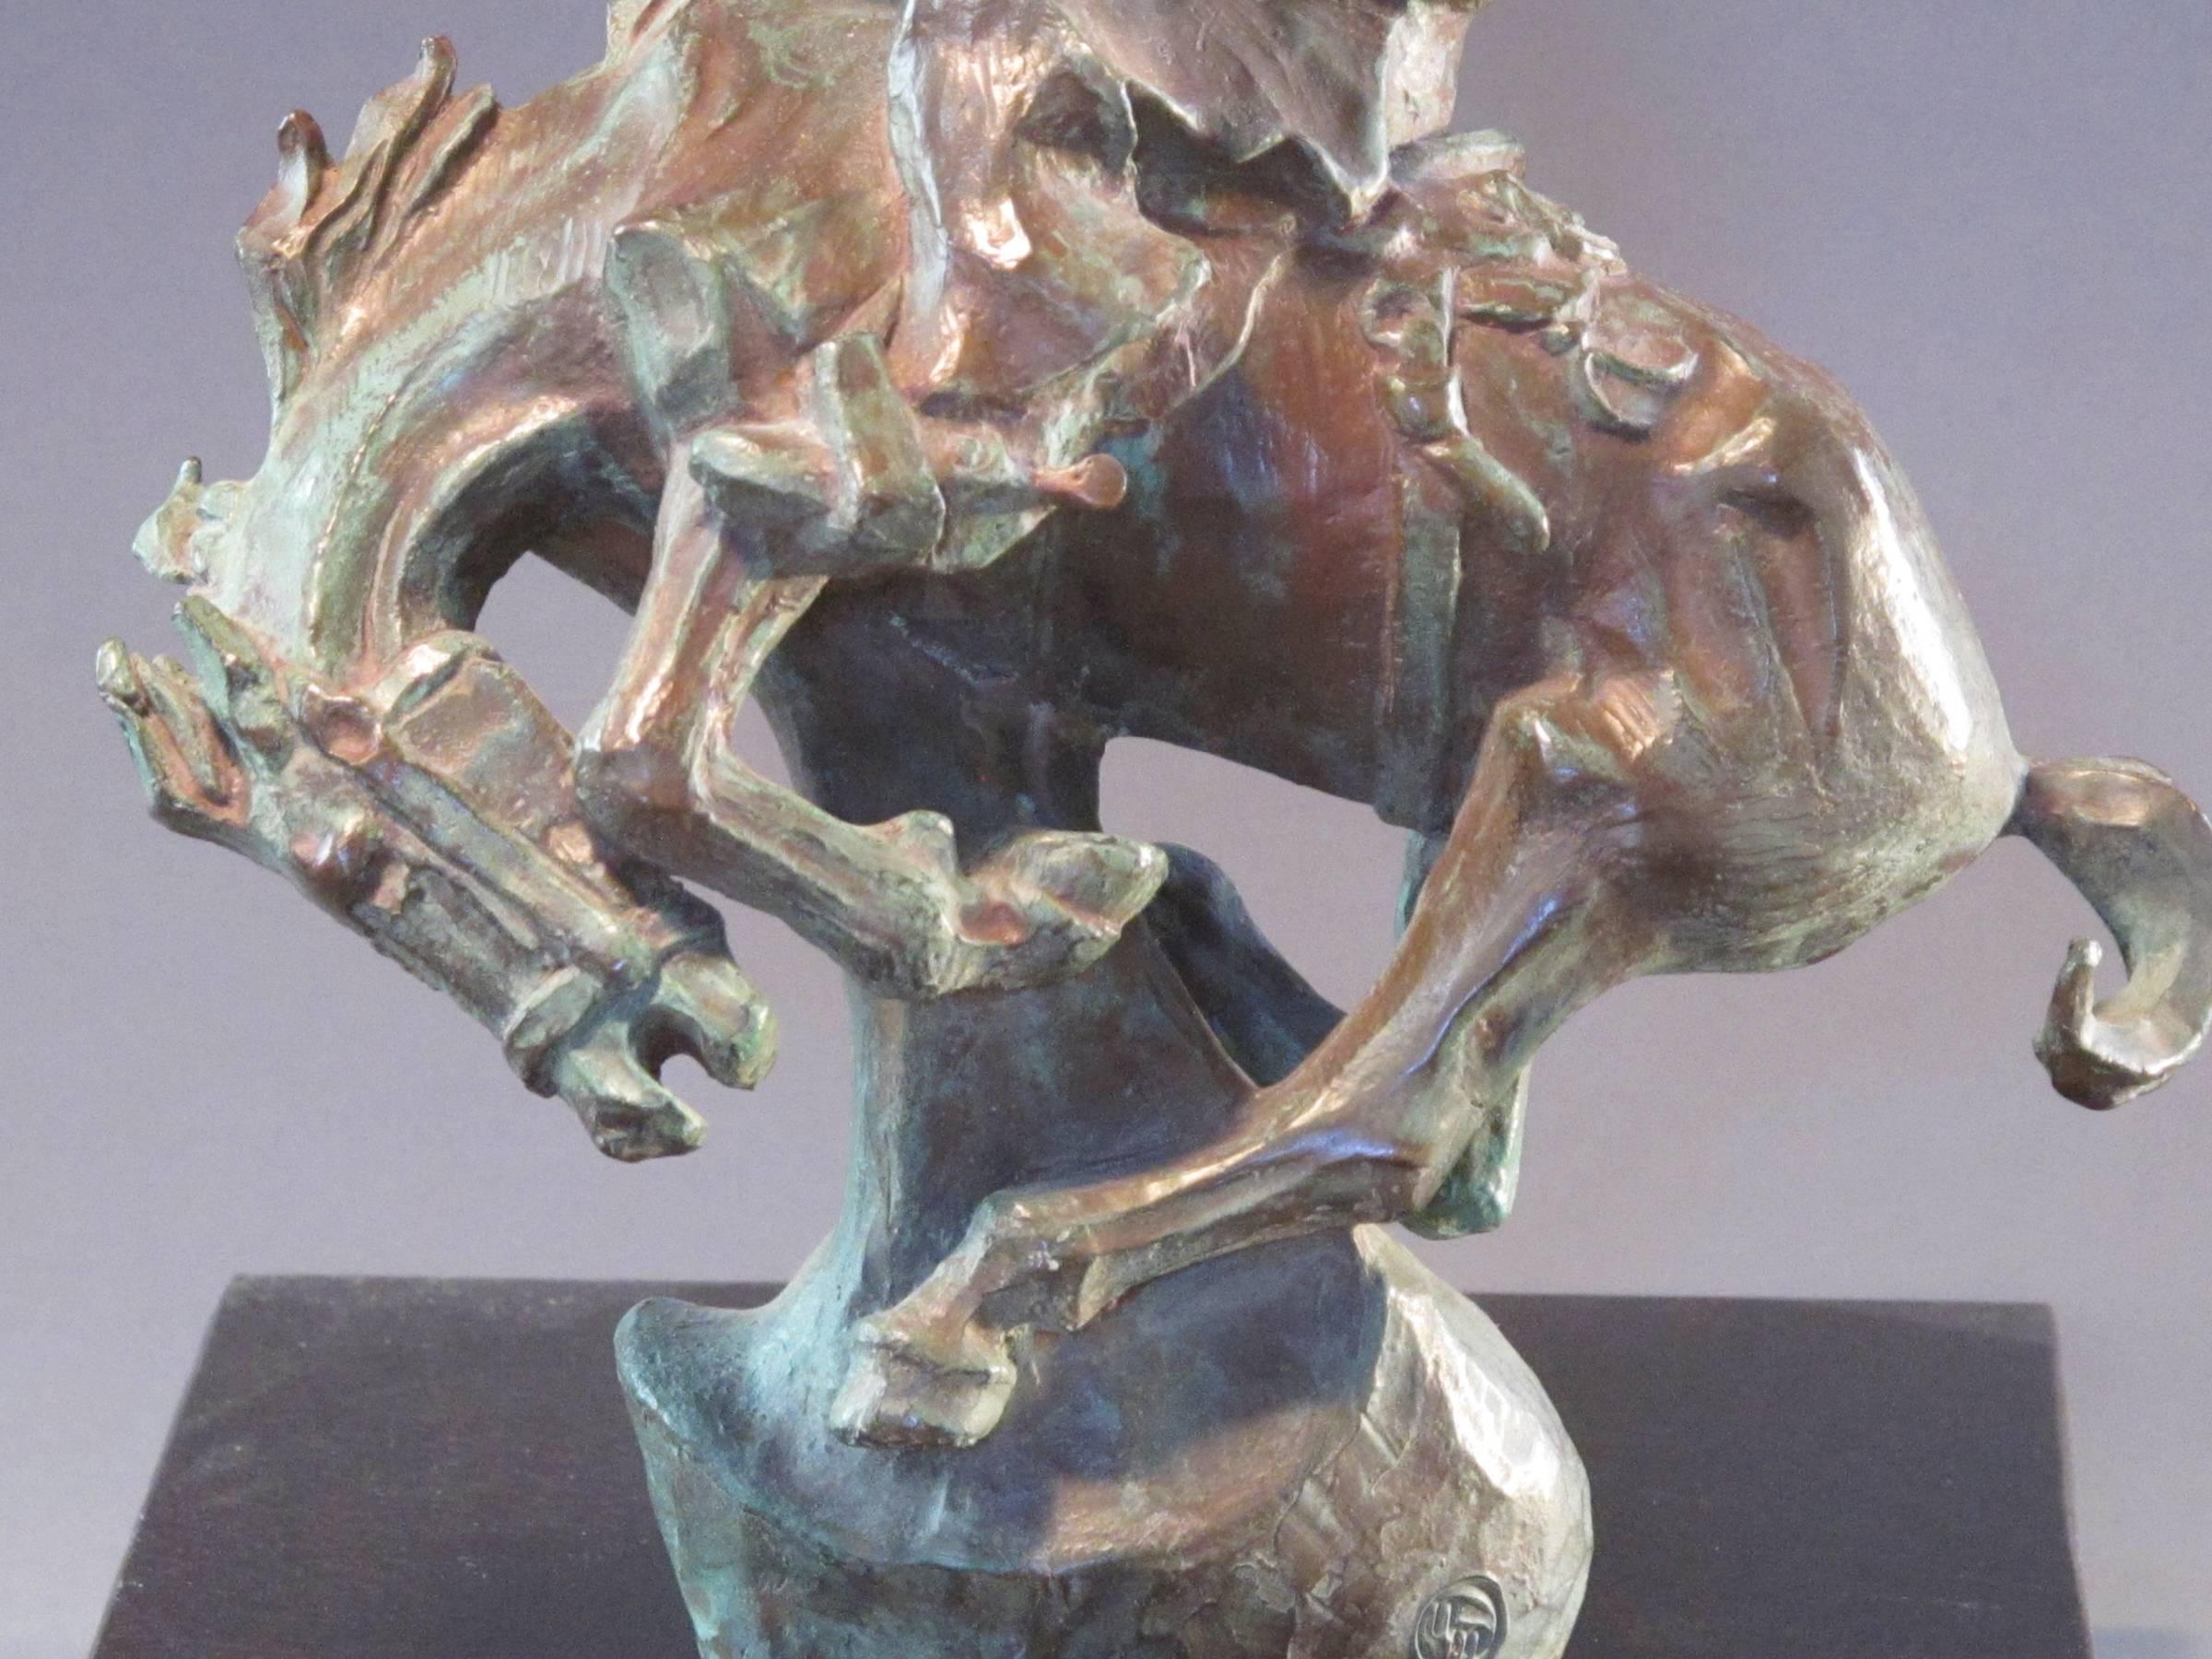 Cowboy Bronco Rider - Gold Figurative Sculpture by Allan Houser